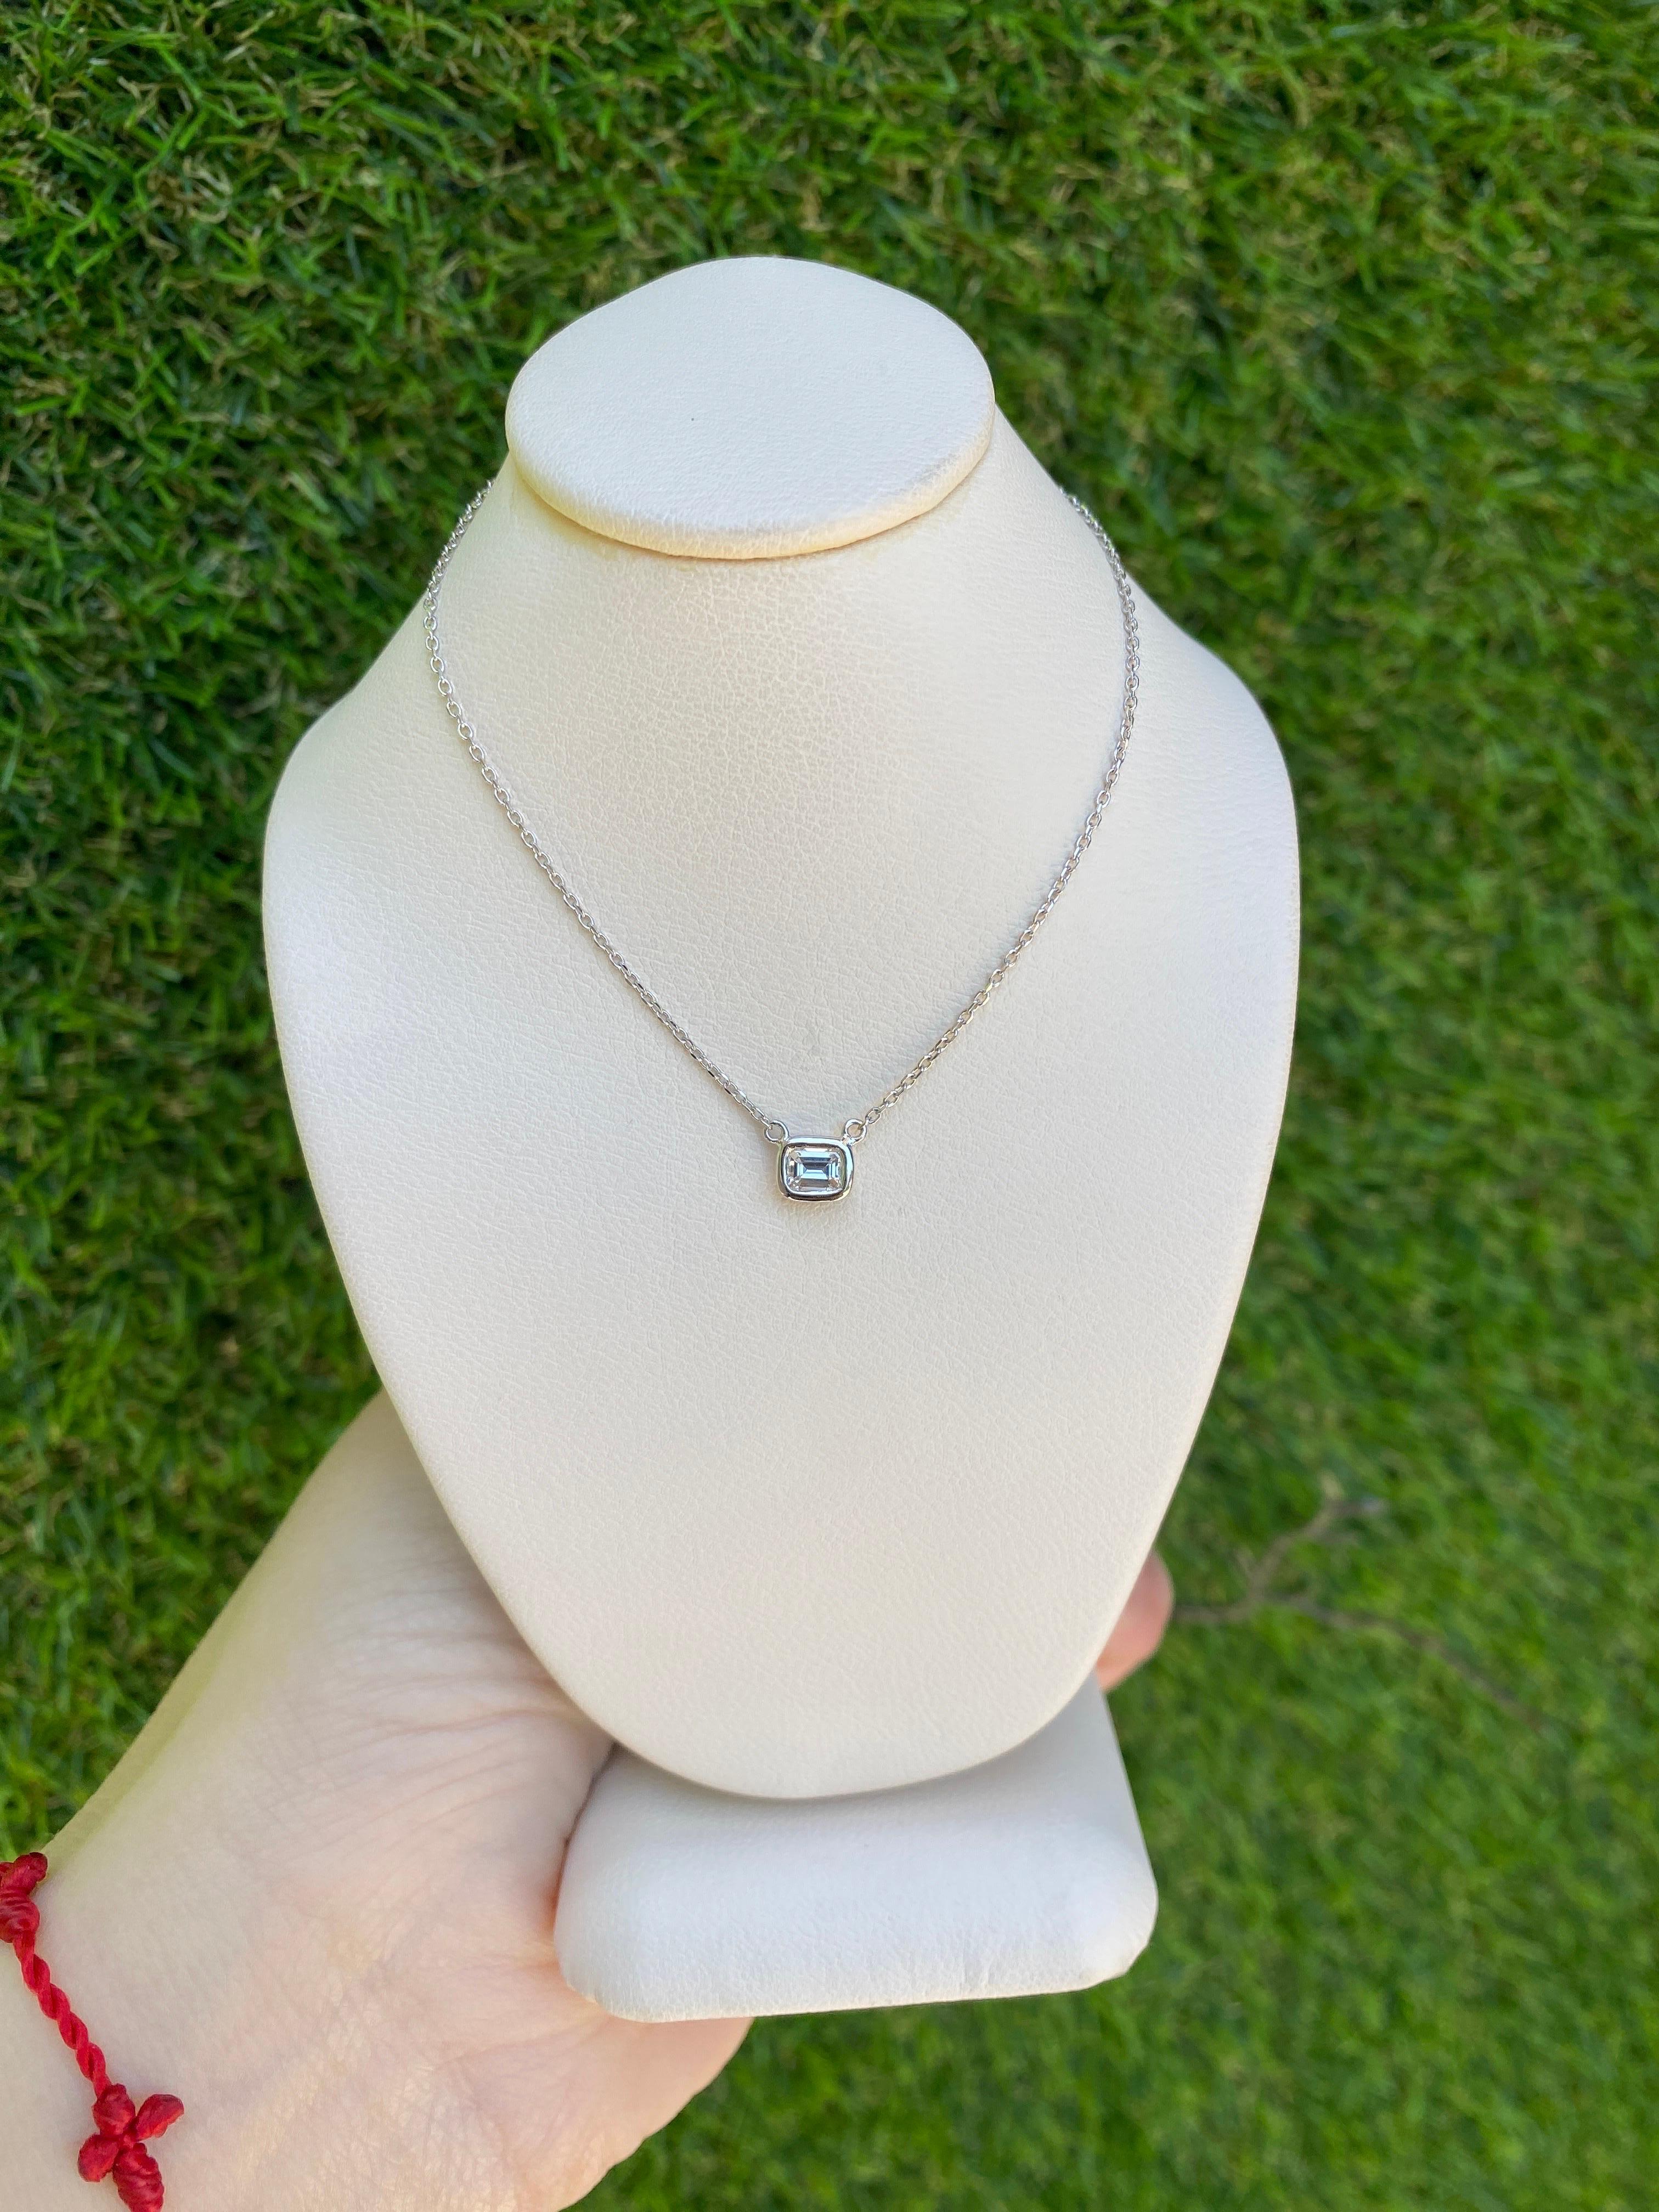 14k White Gold 0.23 Carat Natural Emerald Cut Diamond Pendant Necklace  For Sale 12